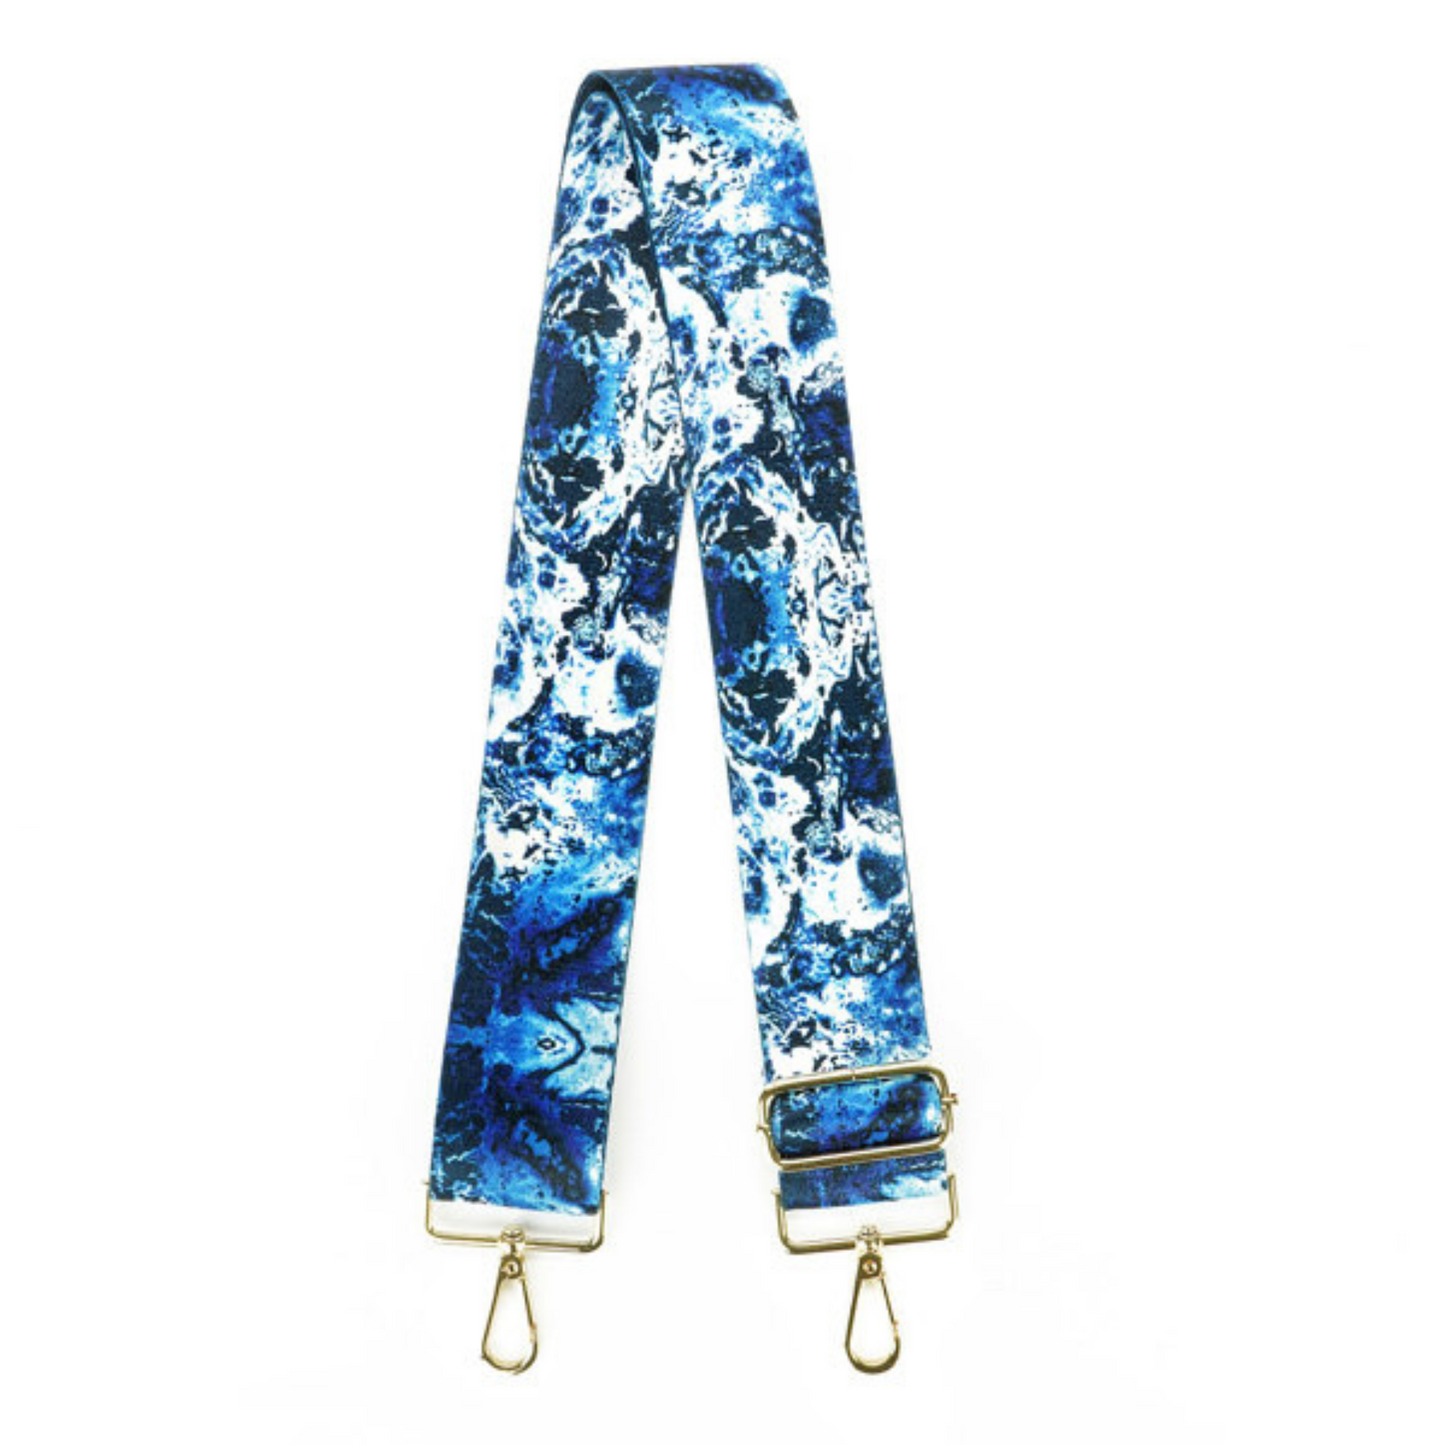 blue swirl adjustable interchangeable purse strap from Kedzie